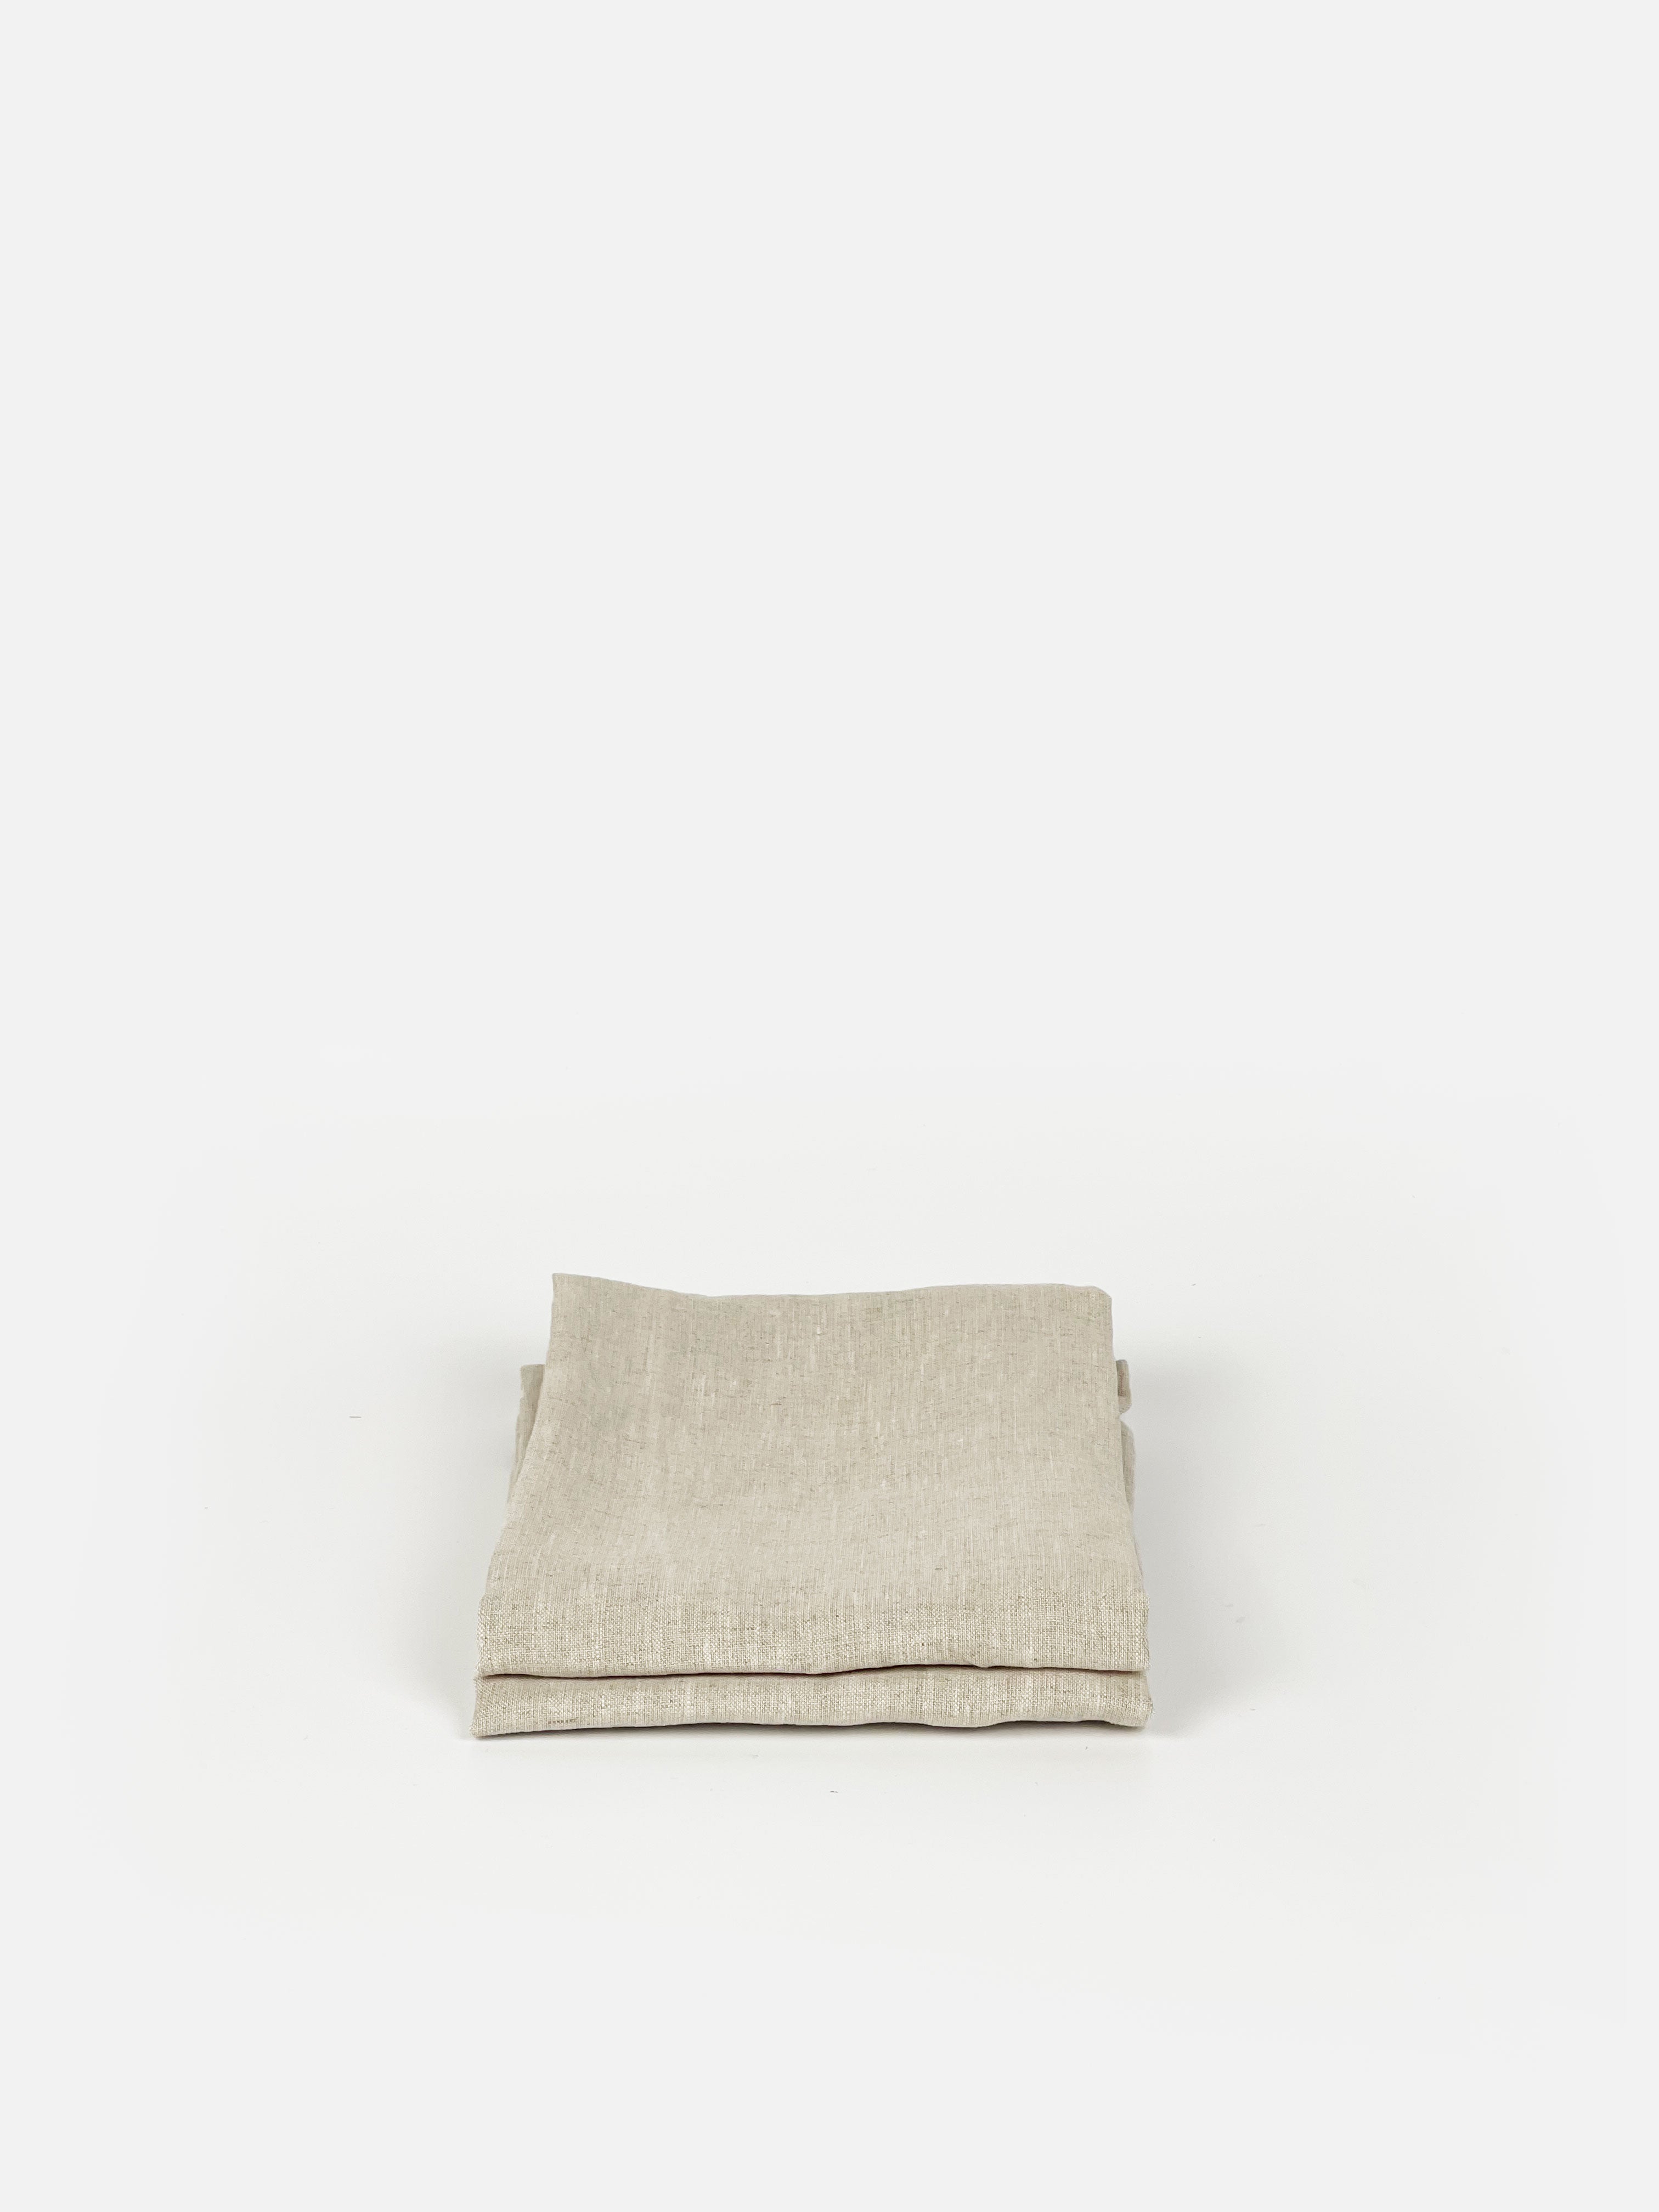 French Flax Linen Tea Towel Set